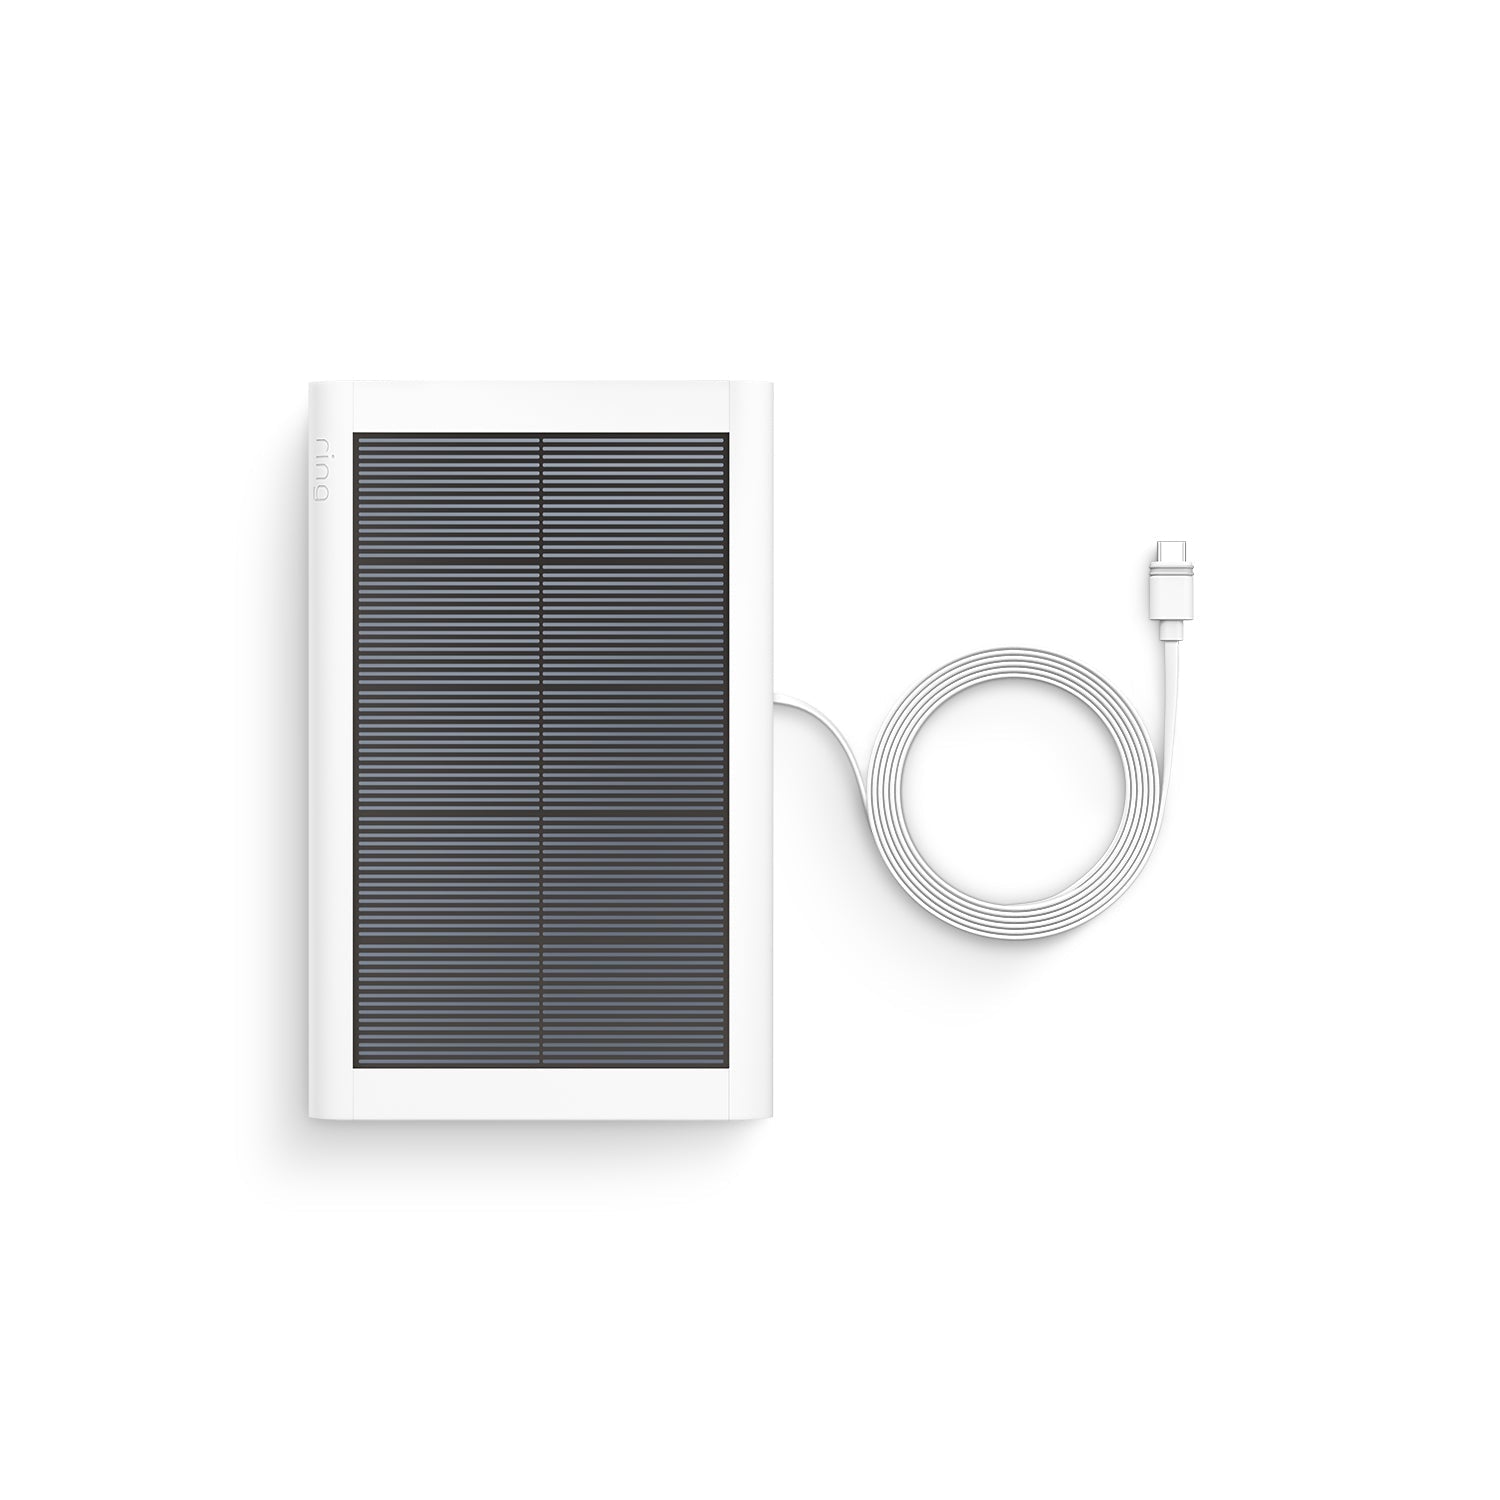 Small Solar Panel (USB-C) (for Stick Up Cam, Stick Up Cam Pro, Spotlight Cam Plus, Spotlight Cam Pro) - Small Solar Panel USB-C in white with power cord